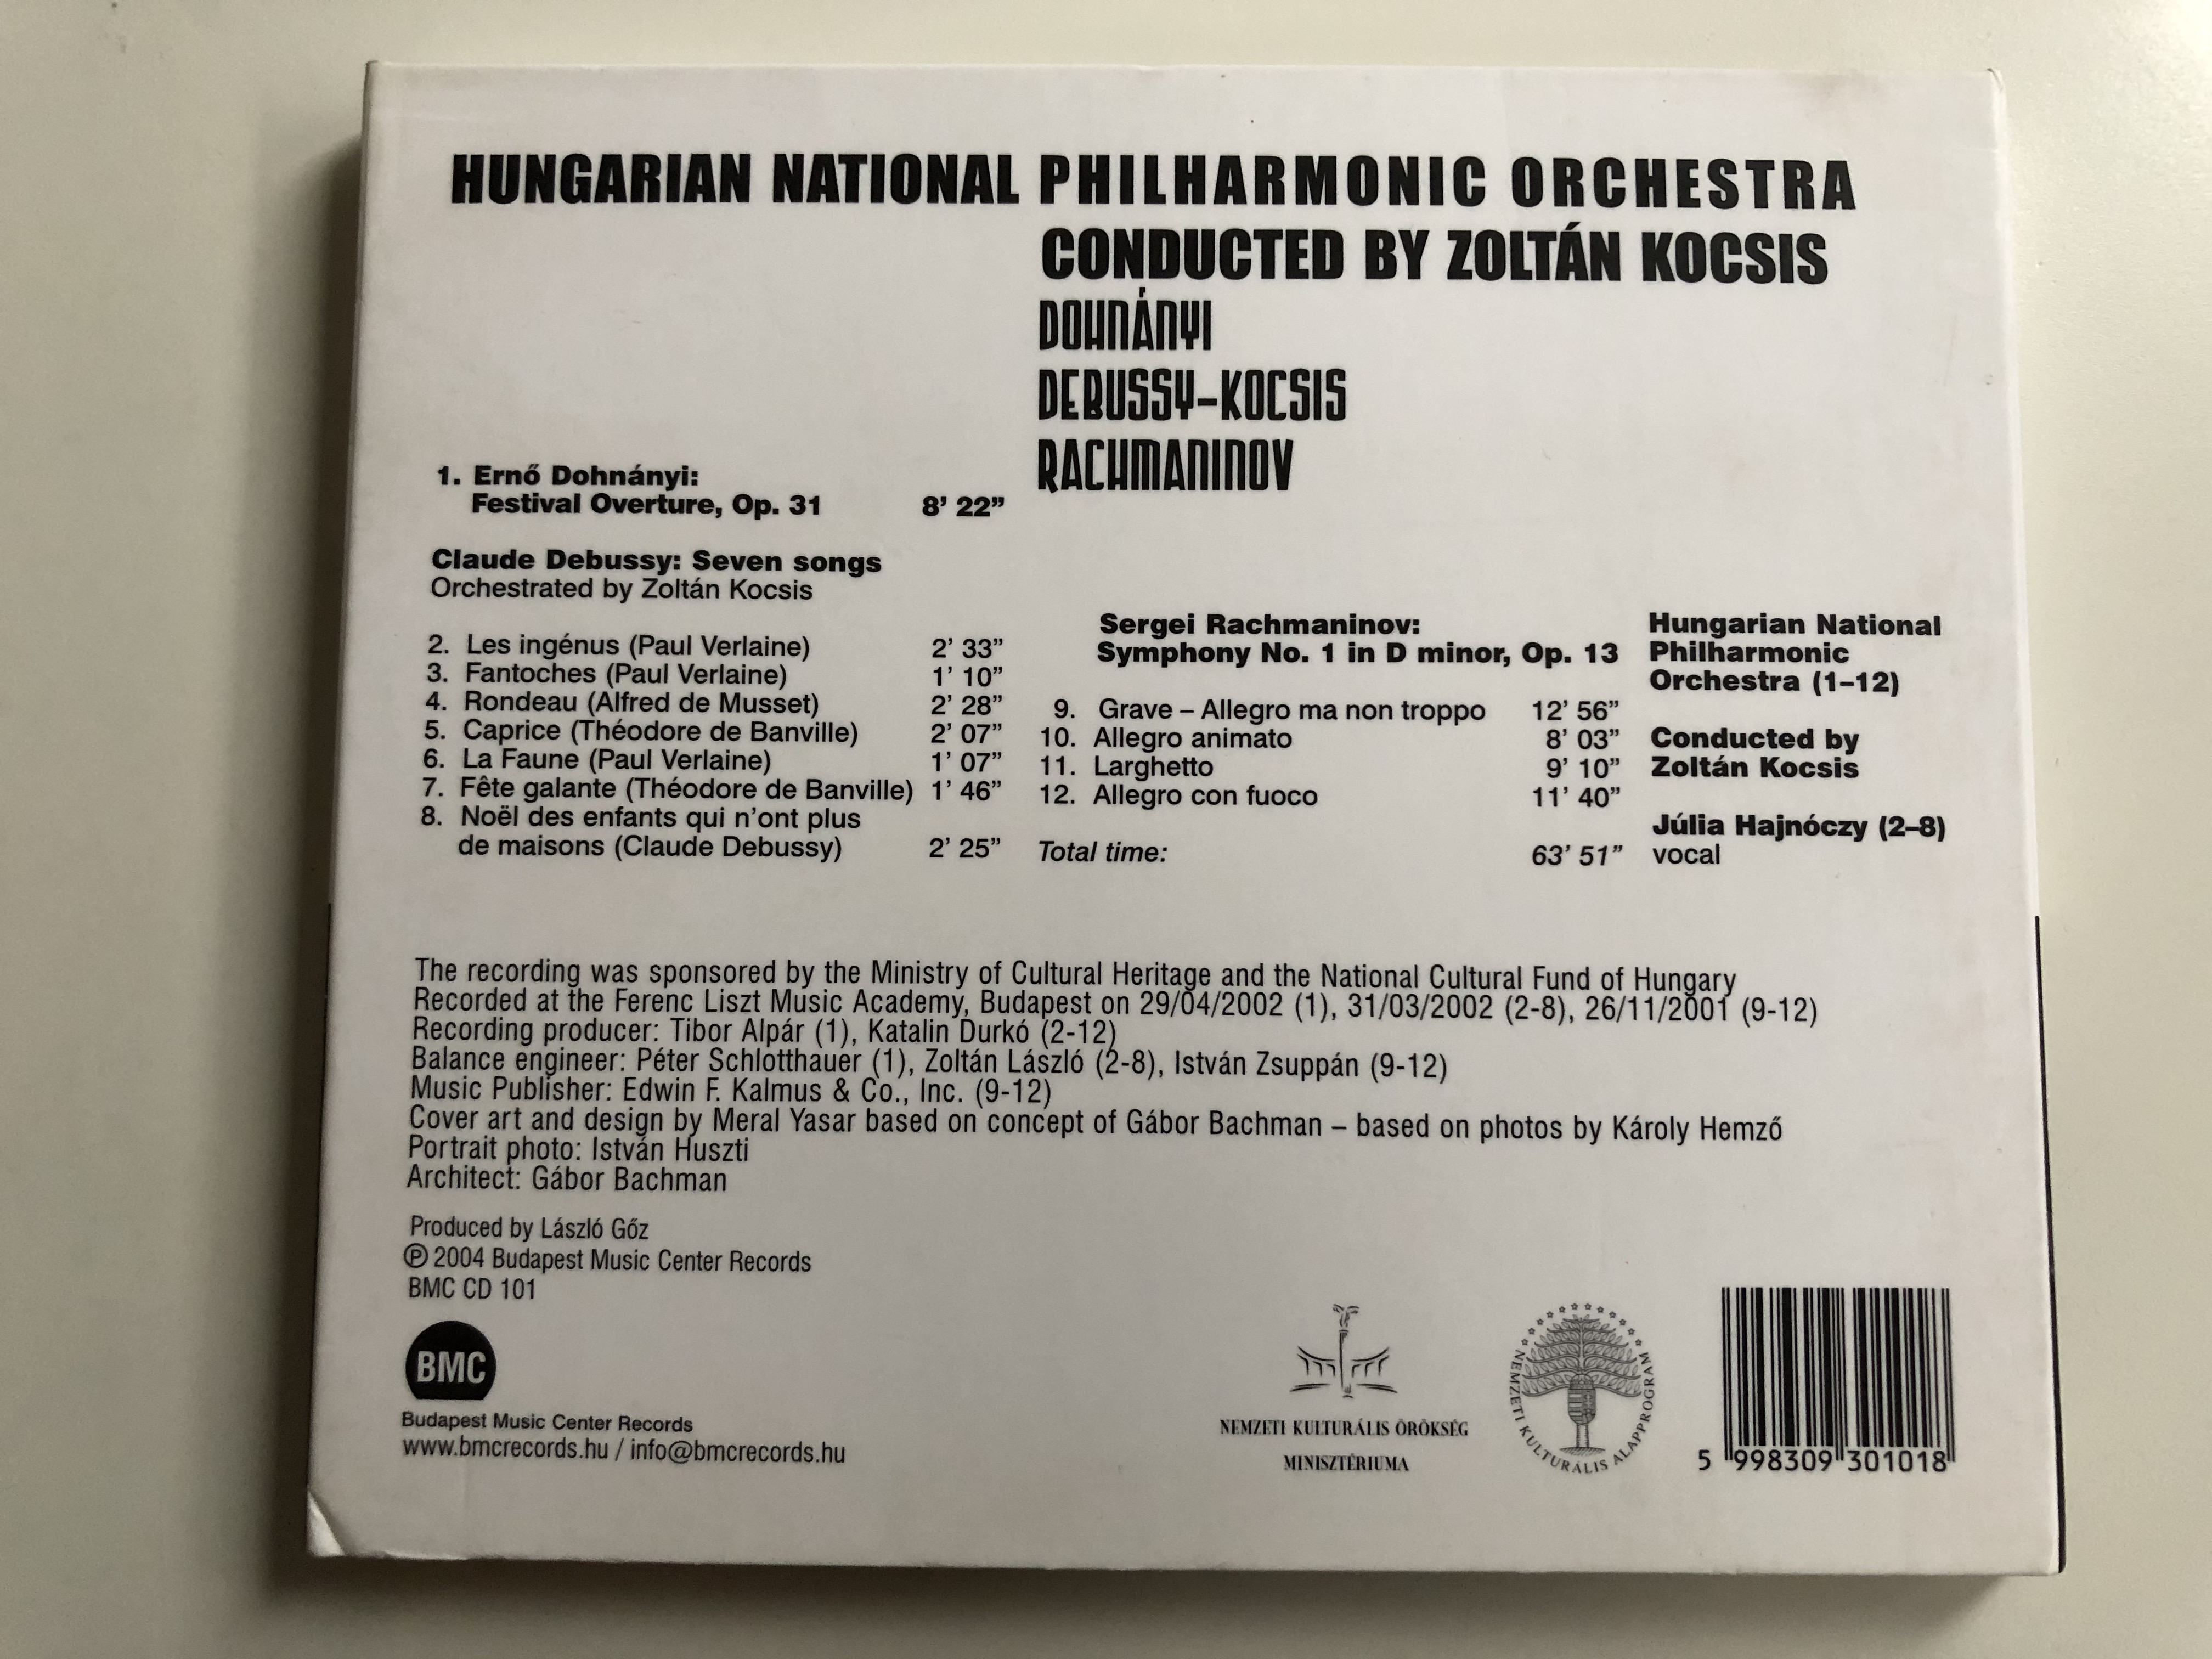 hungarian-national-philharmonic-orchestra-conducted-by-zolt-n-kocsis-dohn-nyi-debussy-kocsis-rachmaninov-budapest-music-center-audio-cd-2004-bmc-cd-101-10-.jpg